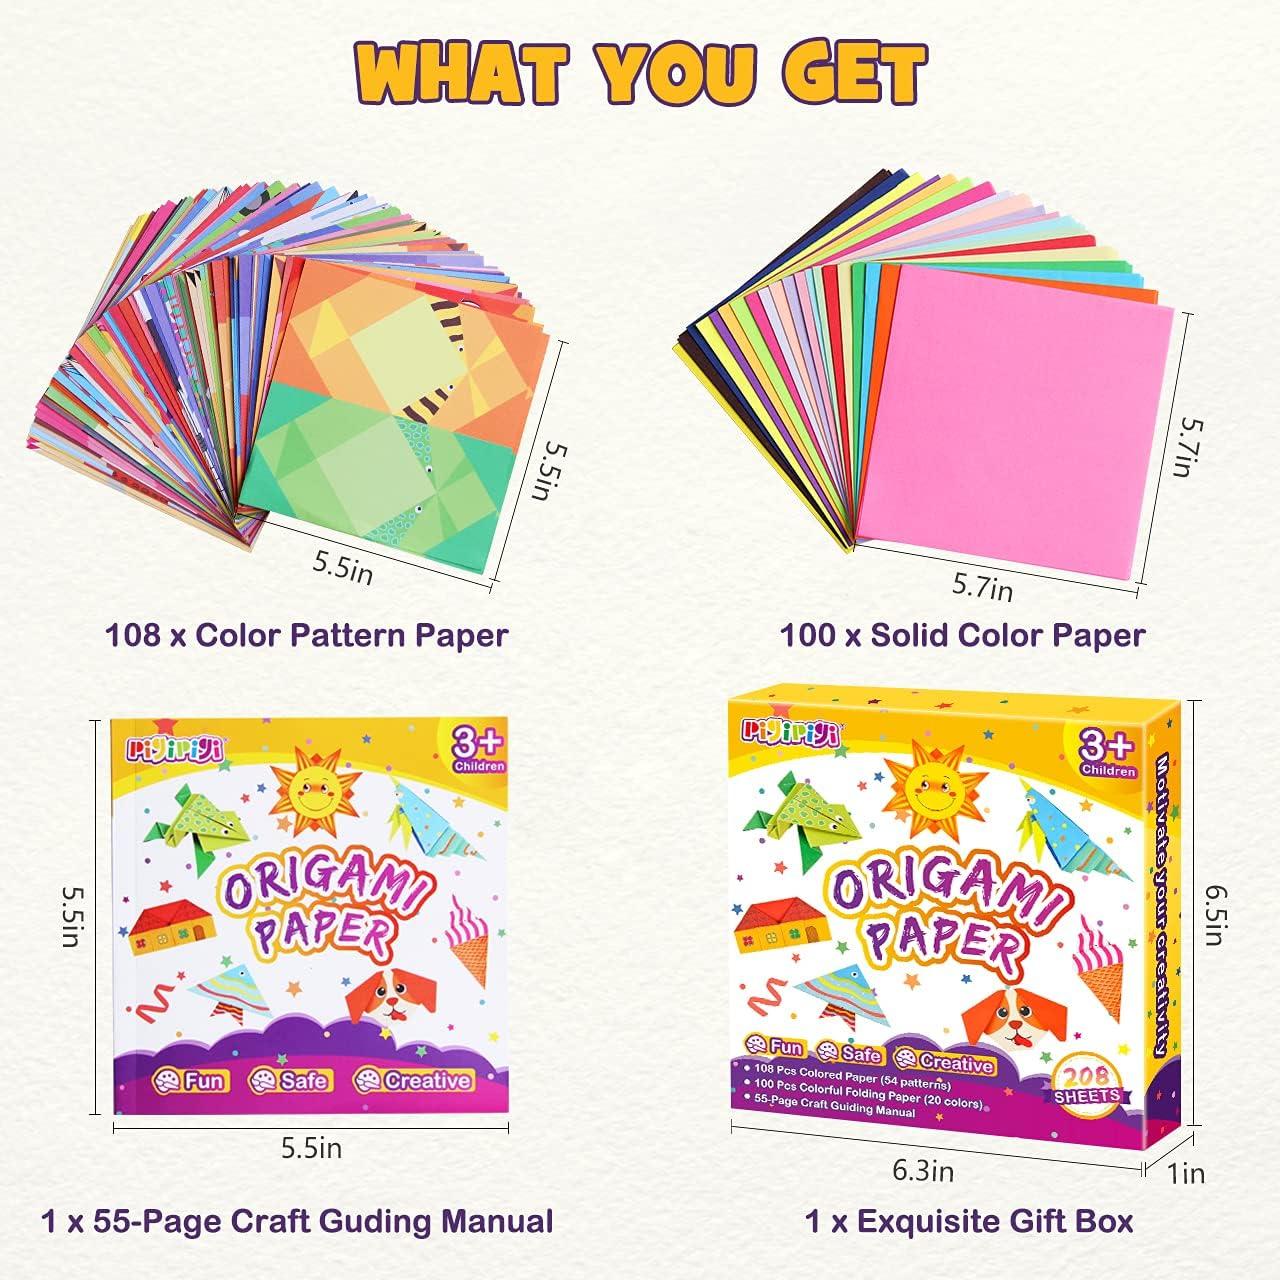 pigipigi Craft Origami Paper for Kids - 208 Sheets India